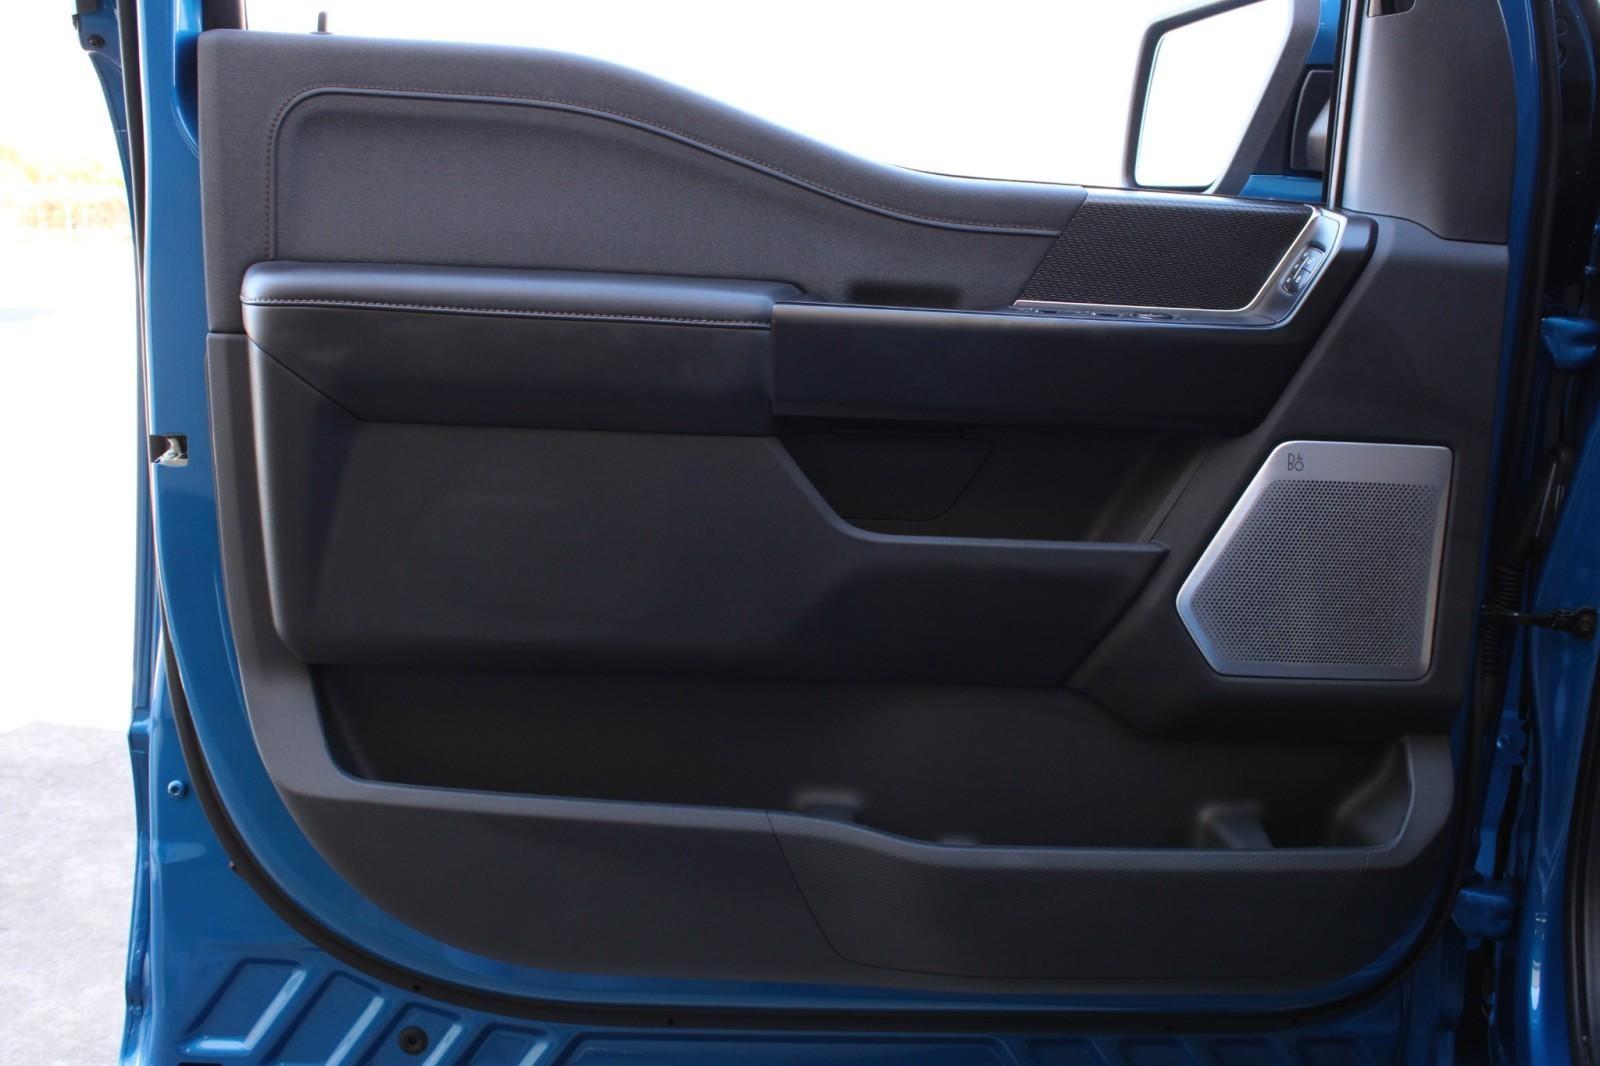 Deep Gray Alcantara Warp Interior Trim Panel Cover Fit For Ford